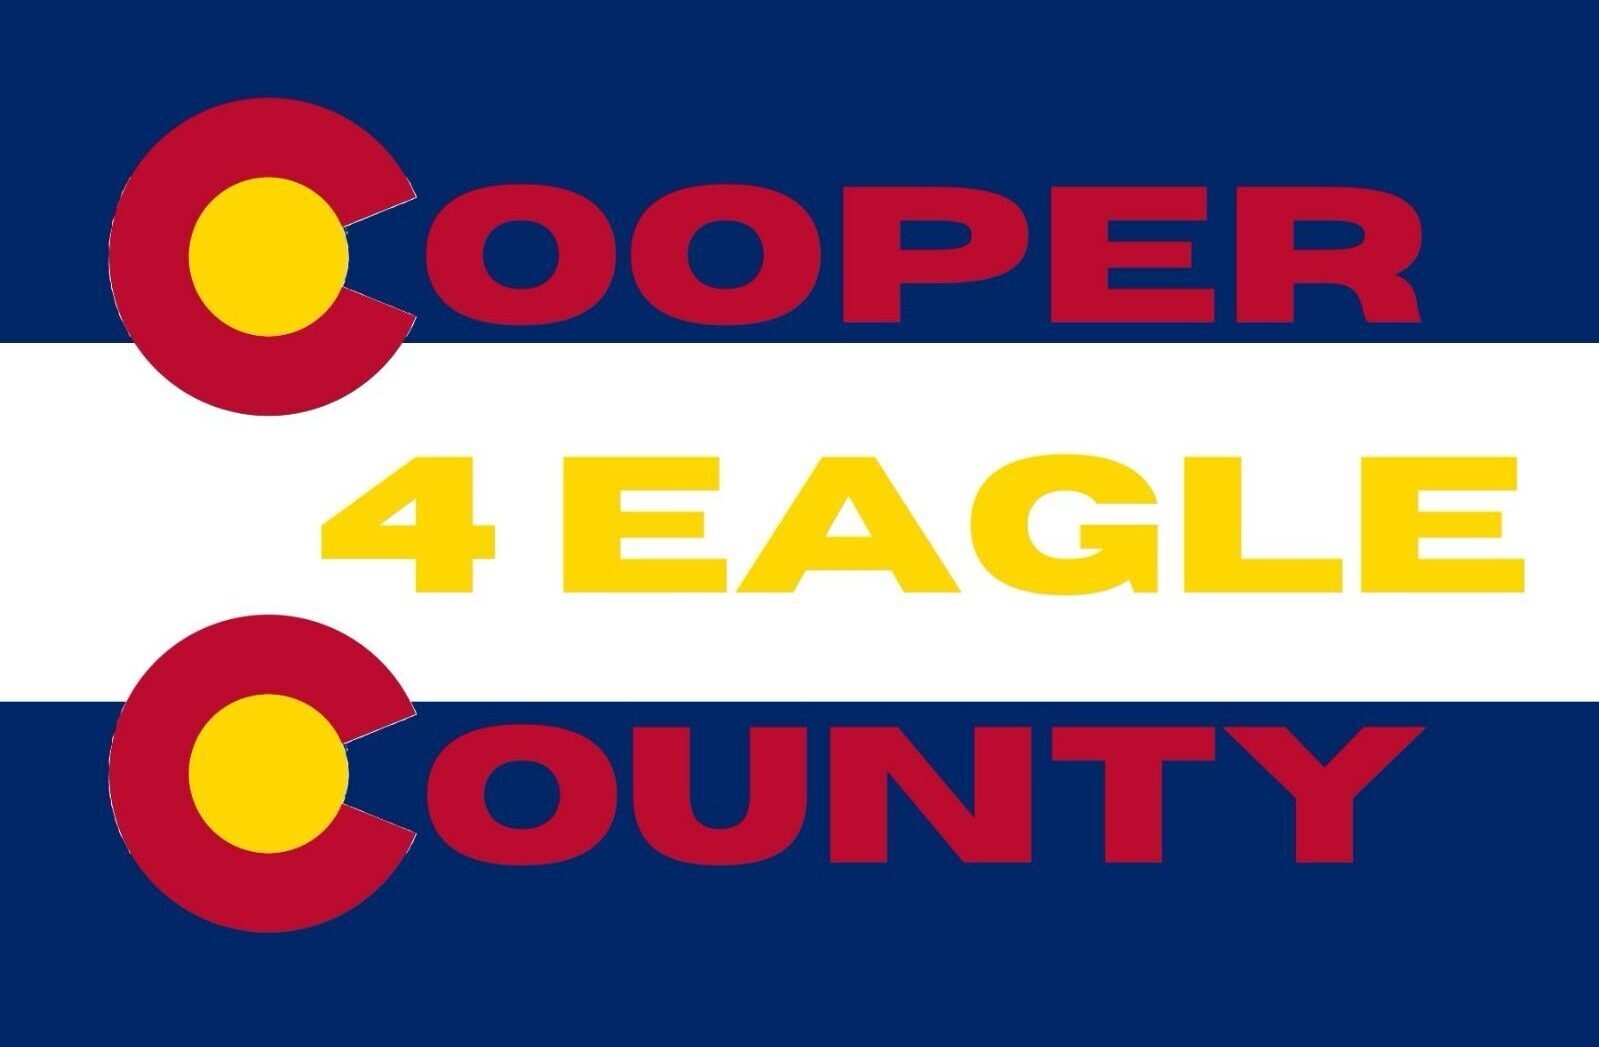 Gregg Cooper for Eagle County Commissioner